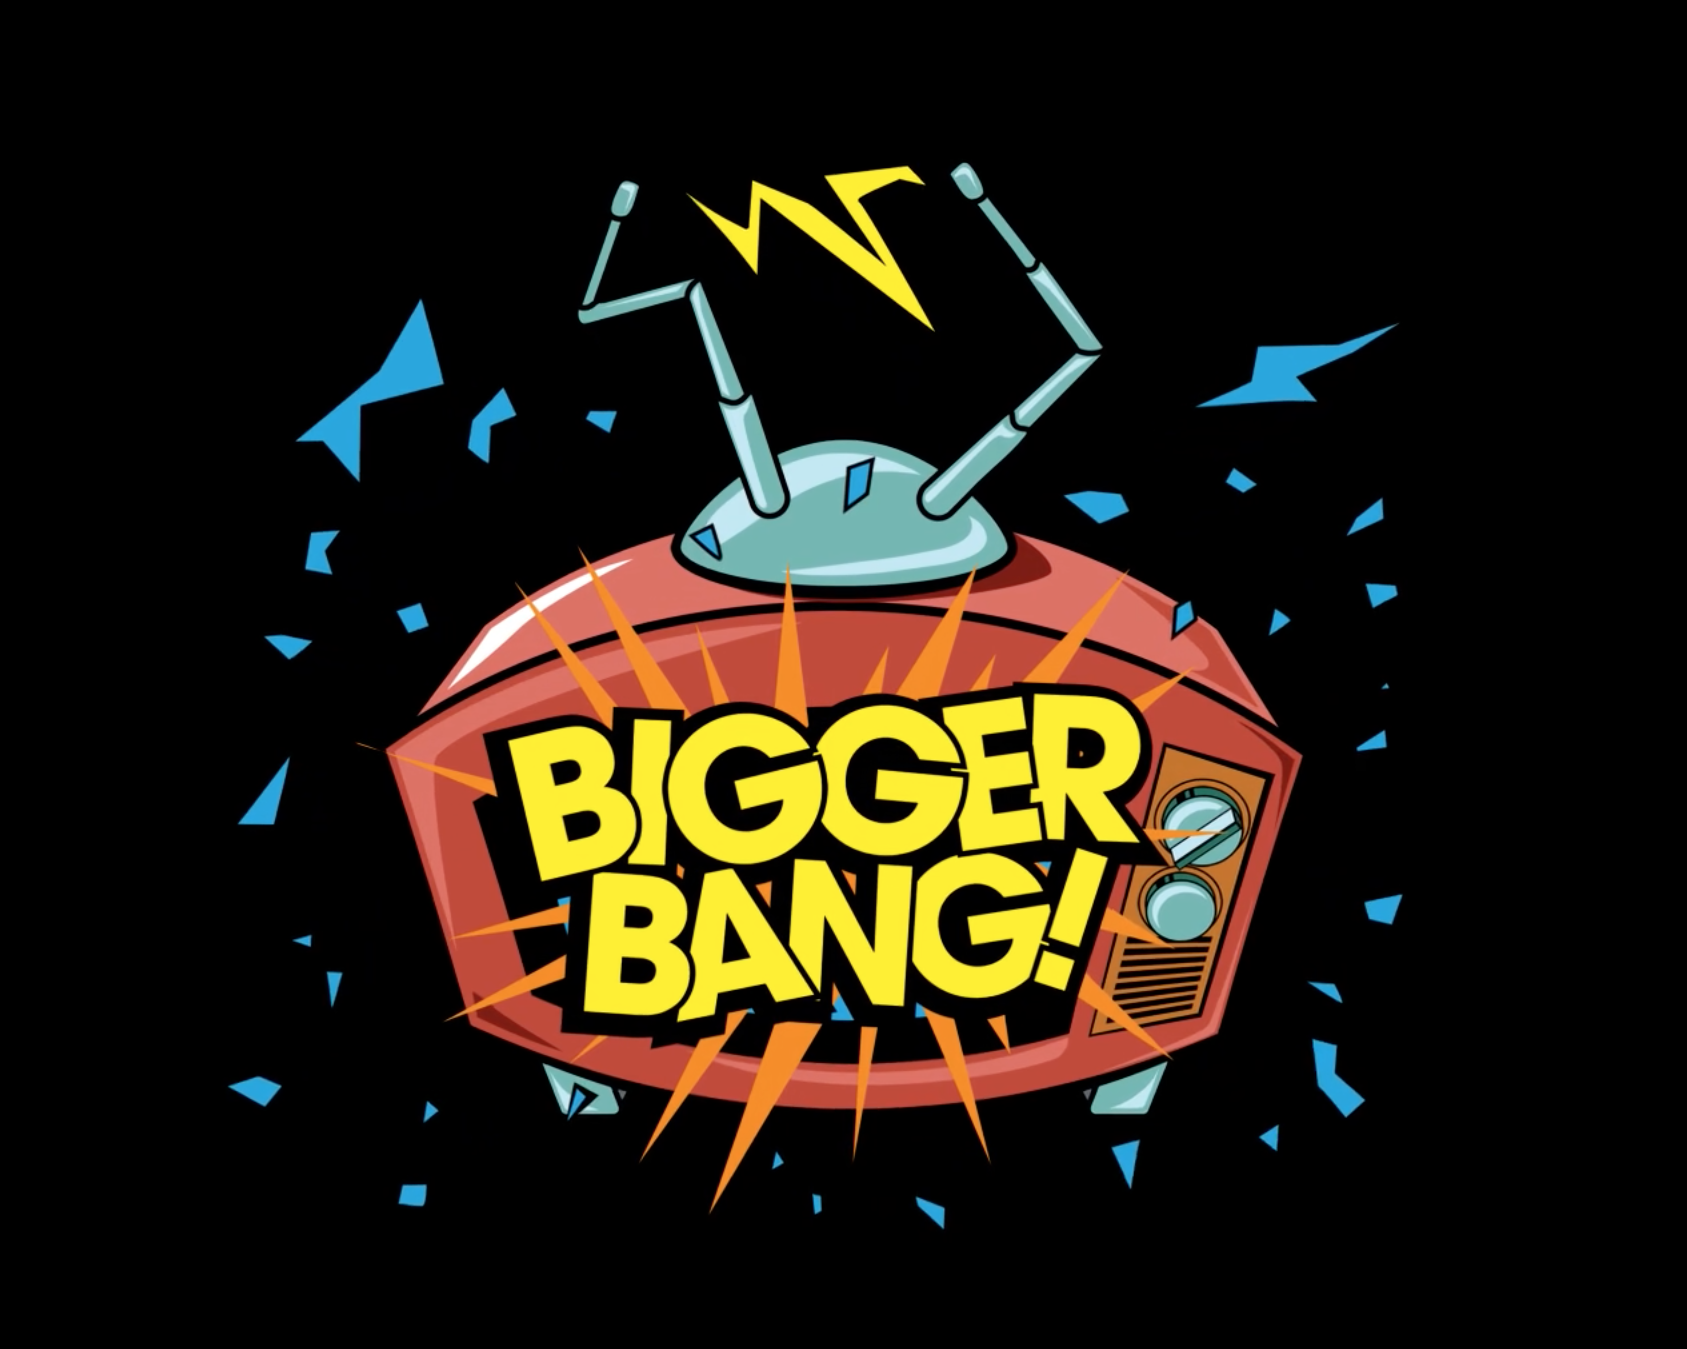 Thank You - Torey Pudwill's "Bigger Bang" cover